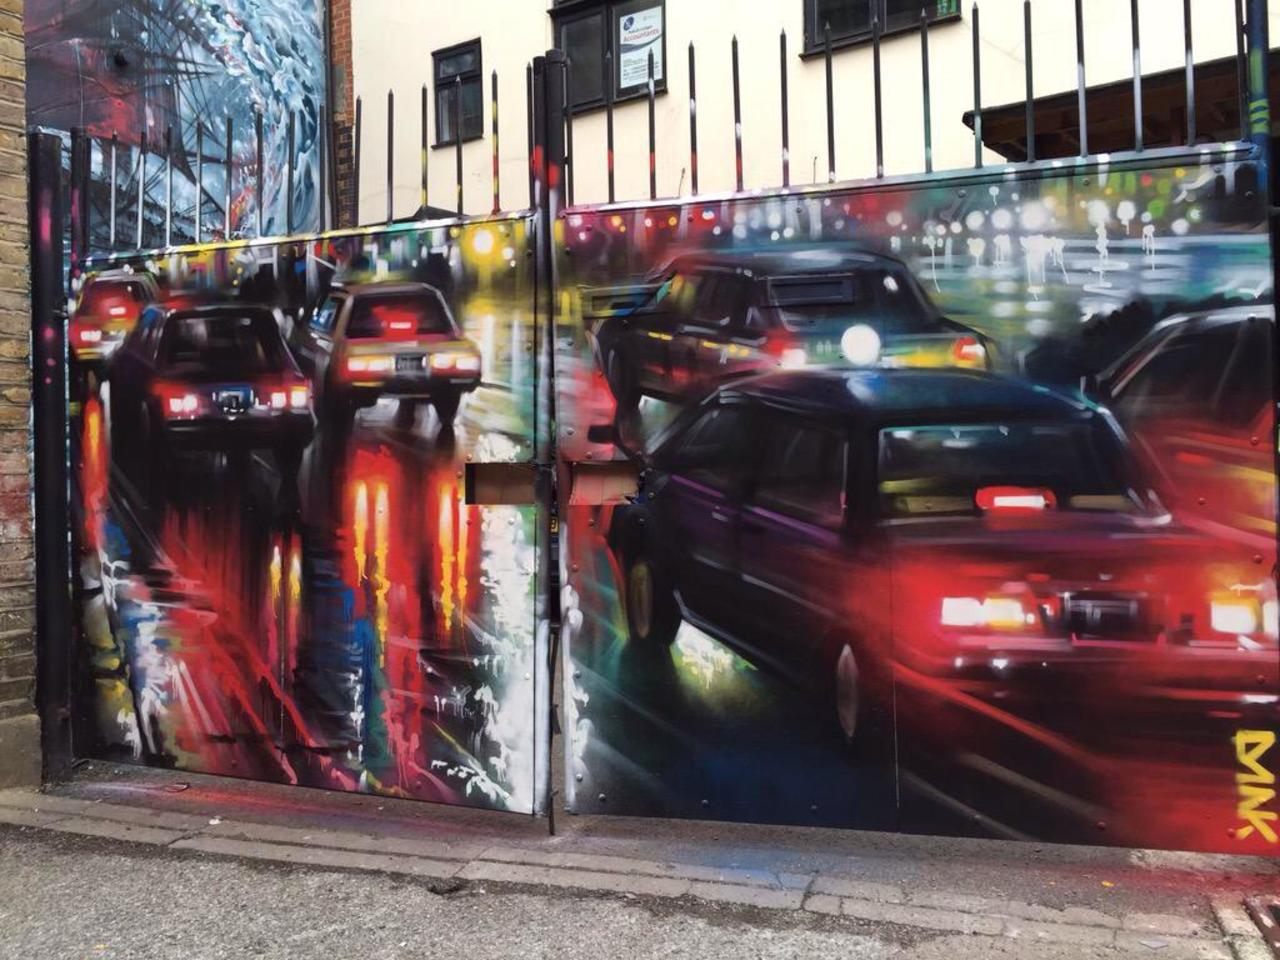 New Street Art by DanKitchener in Brick Lane London 

#art #graffiti #mural #streetart http://t.co/ucnk0esLYq